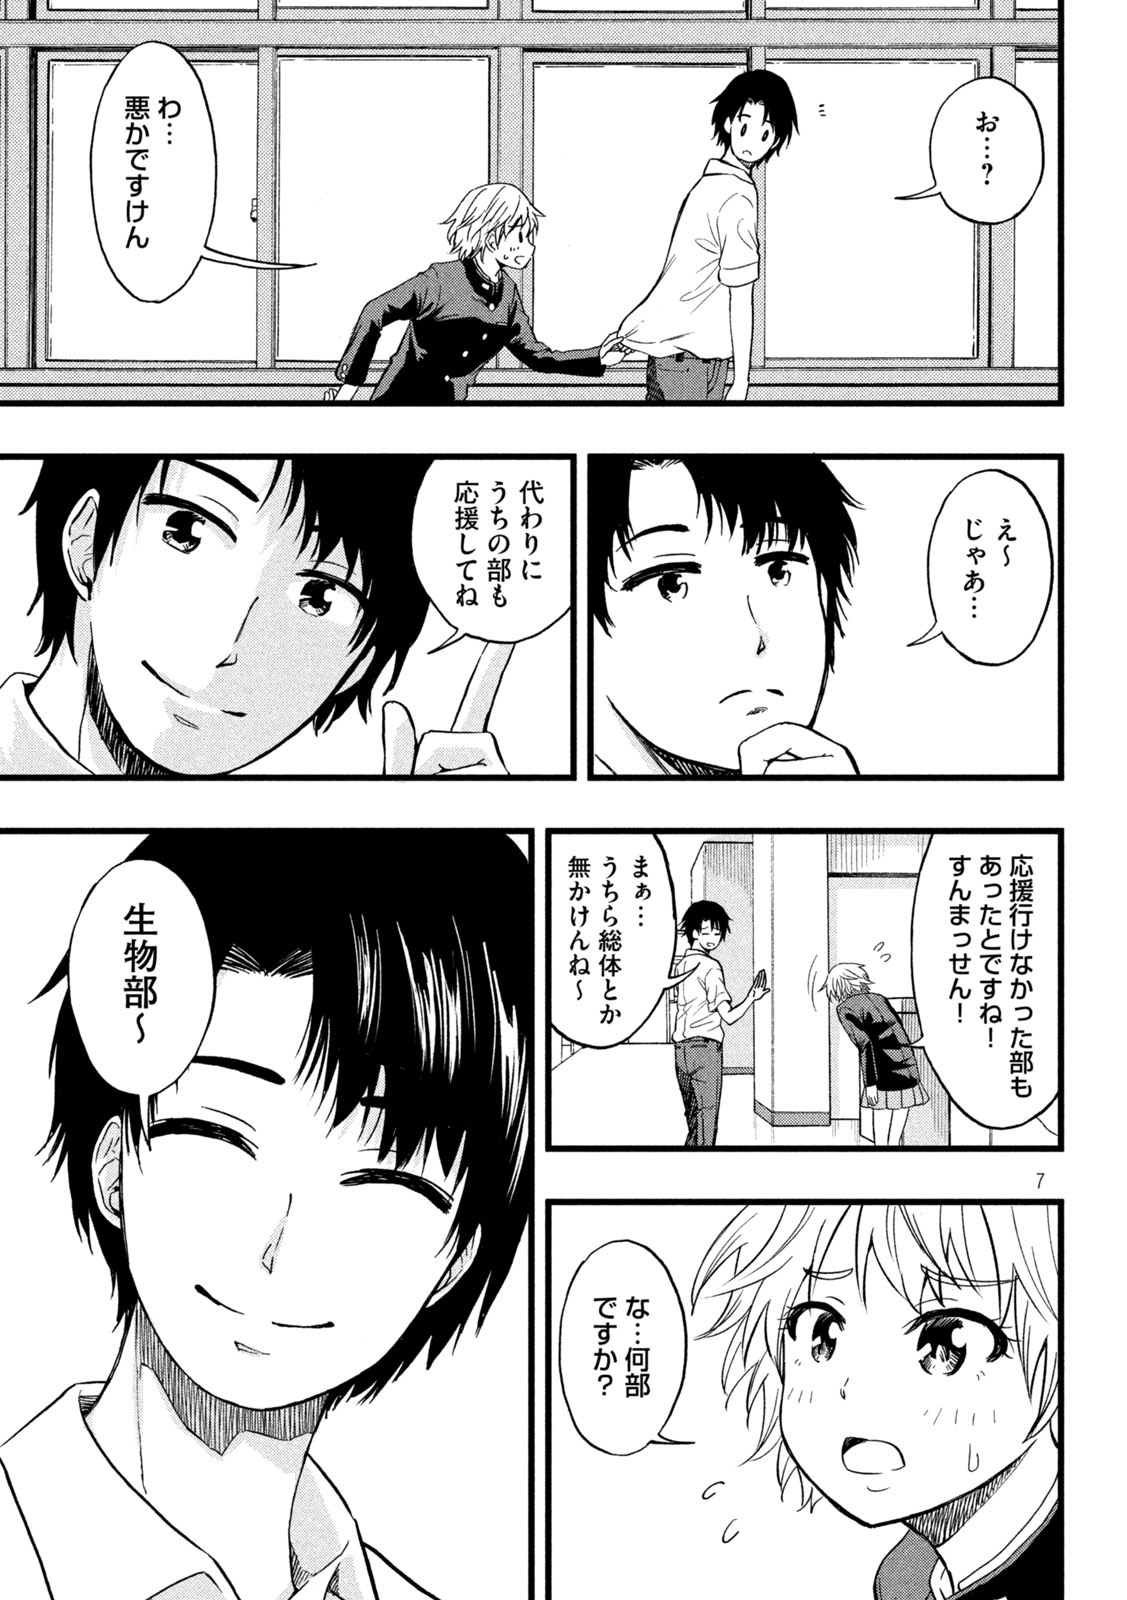 Koharu haru! - Chapter 40 - Page 3